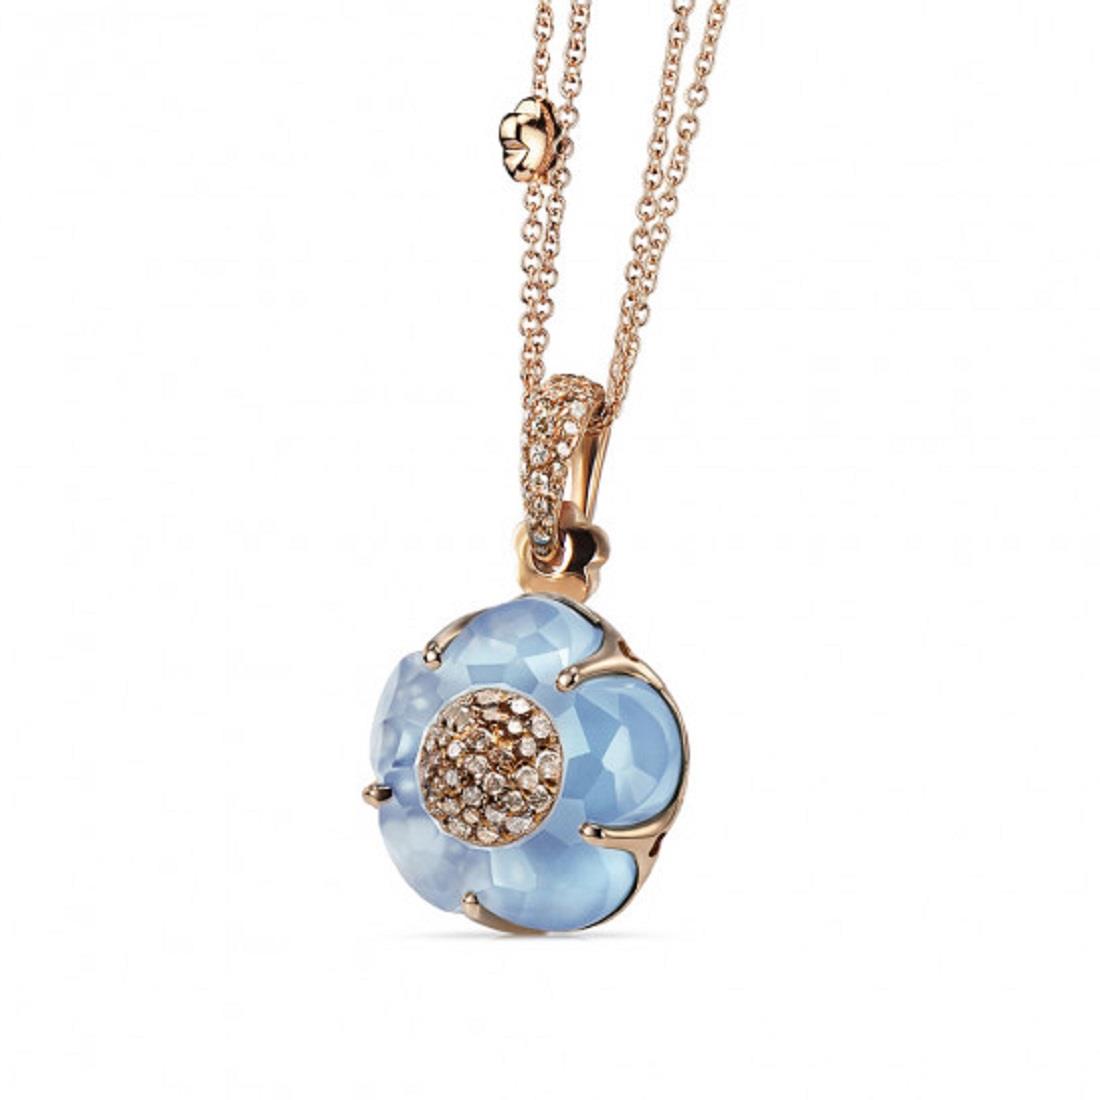 Bon Ton necklace with blue topaz and diamonds - PASQUALE BRUNI